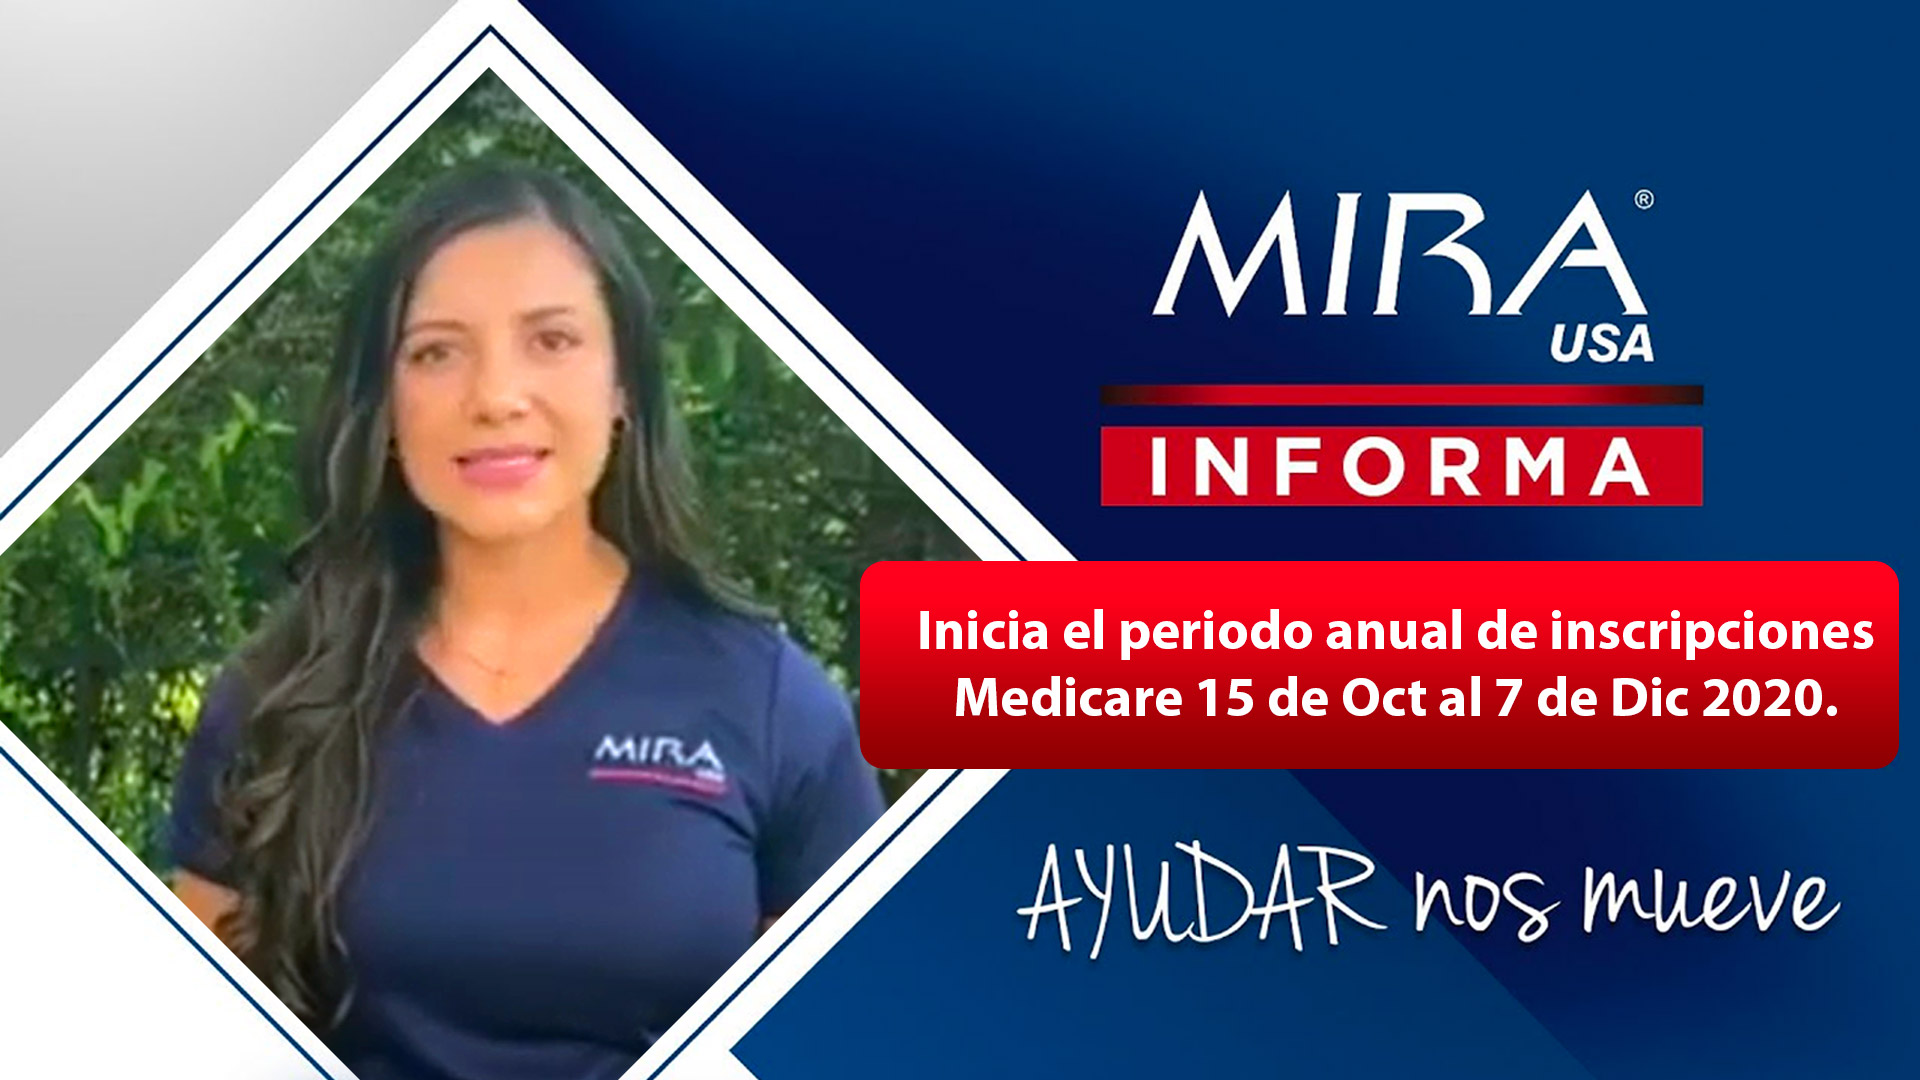 MIRA USA Informa: Inicia el periodo anual de inscripciones Medicare 15 de Oct al 7 de Dic 2020.